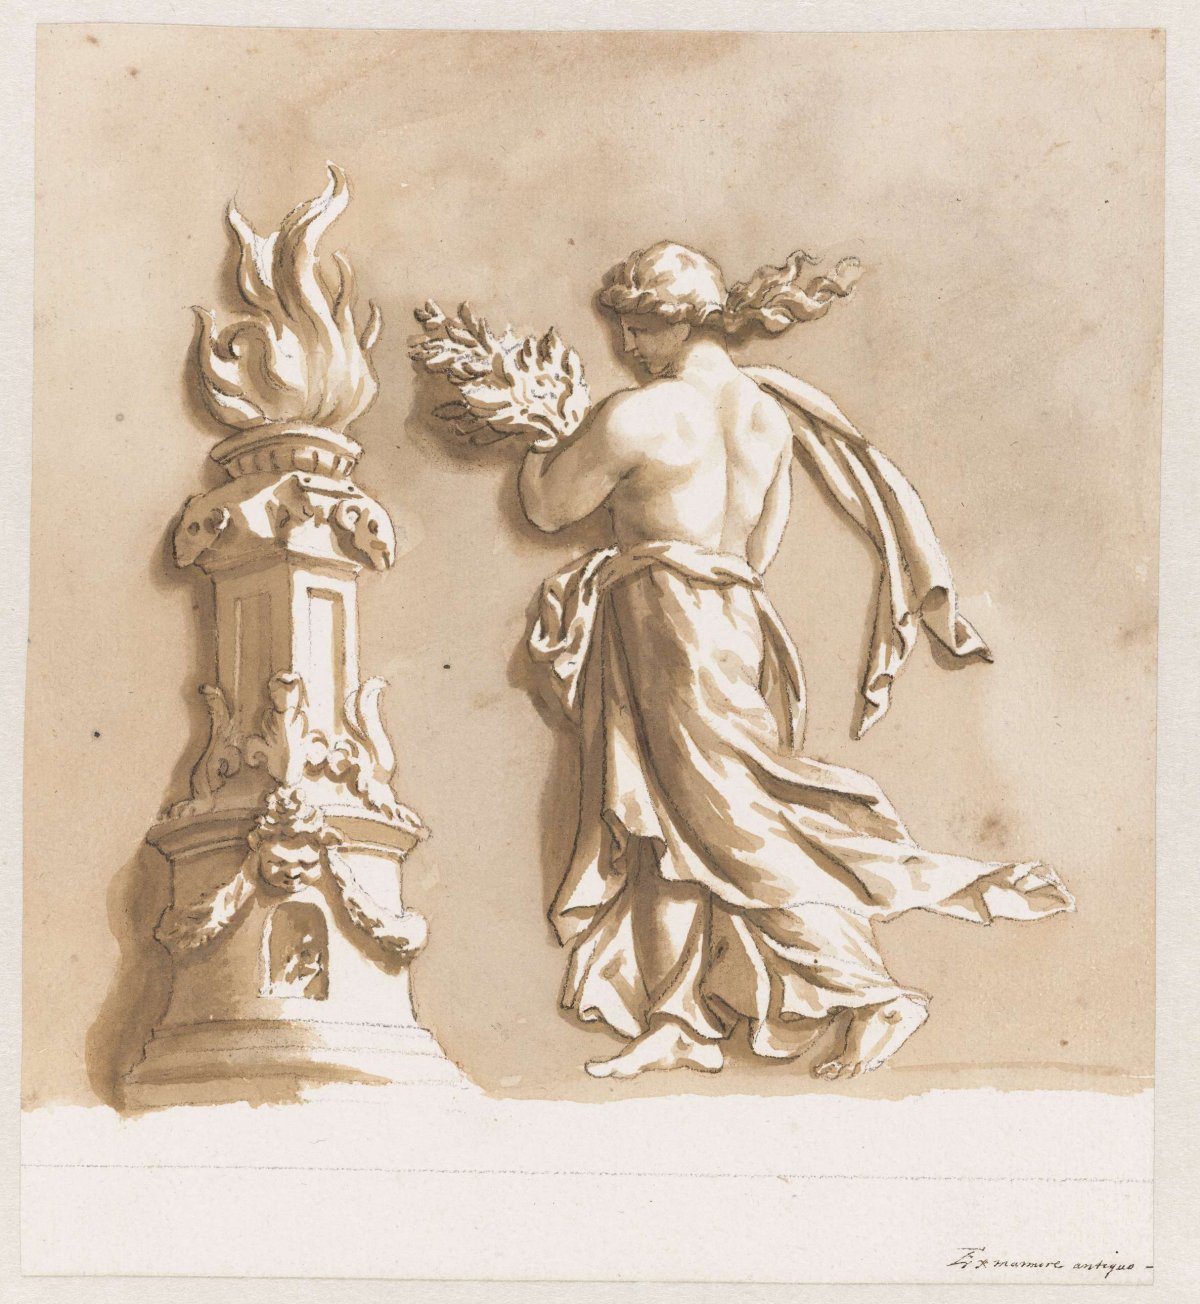 Woman at an altar, Jan de Bisschop, 1648 - 1671